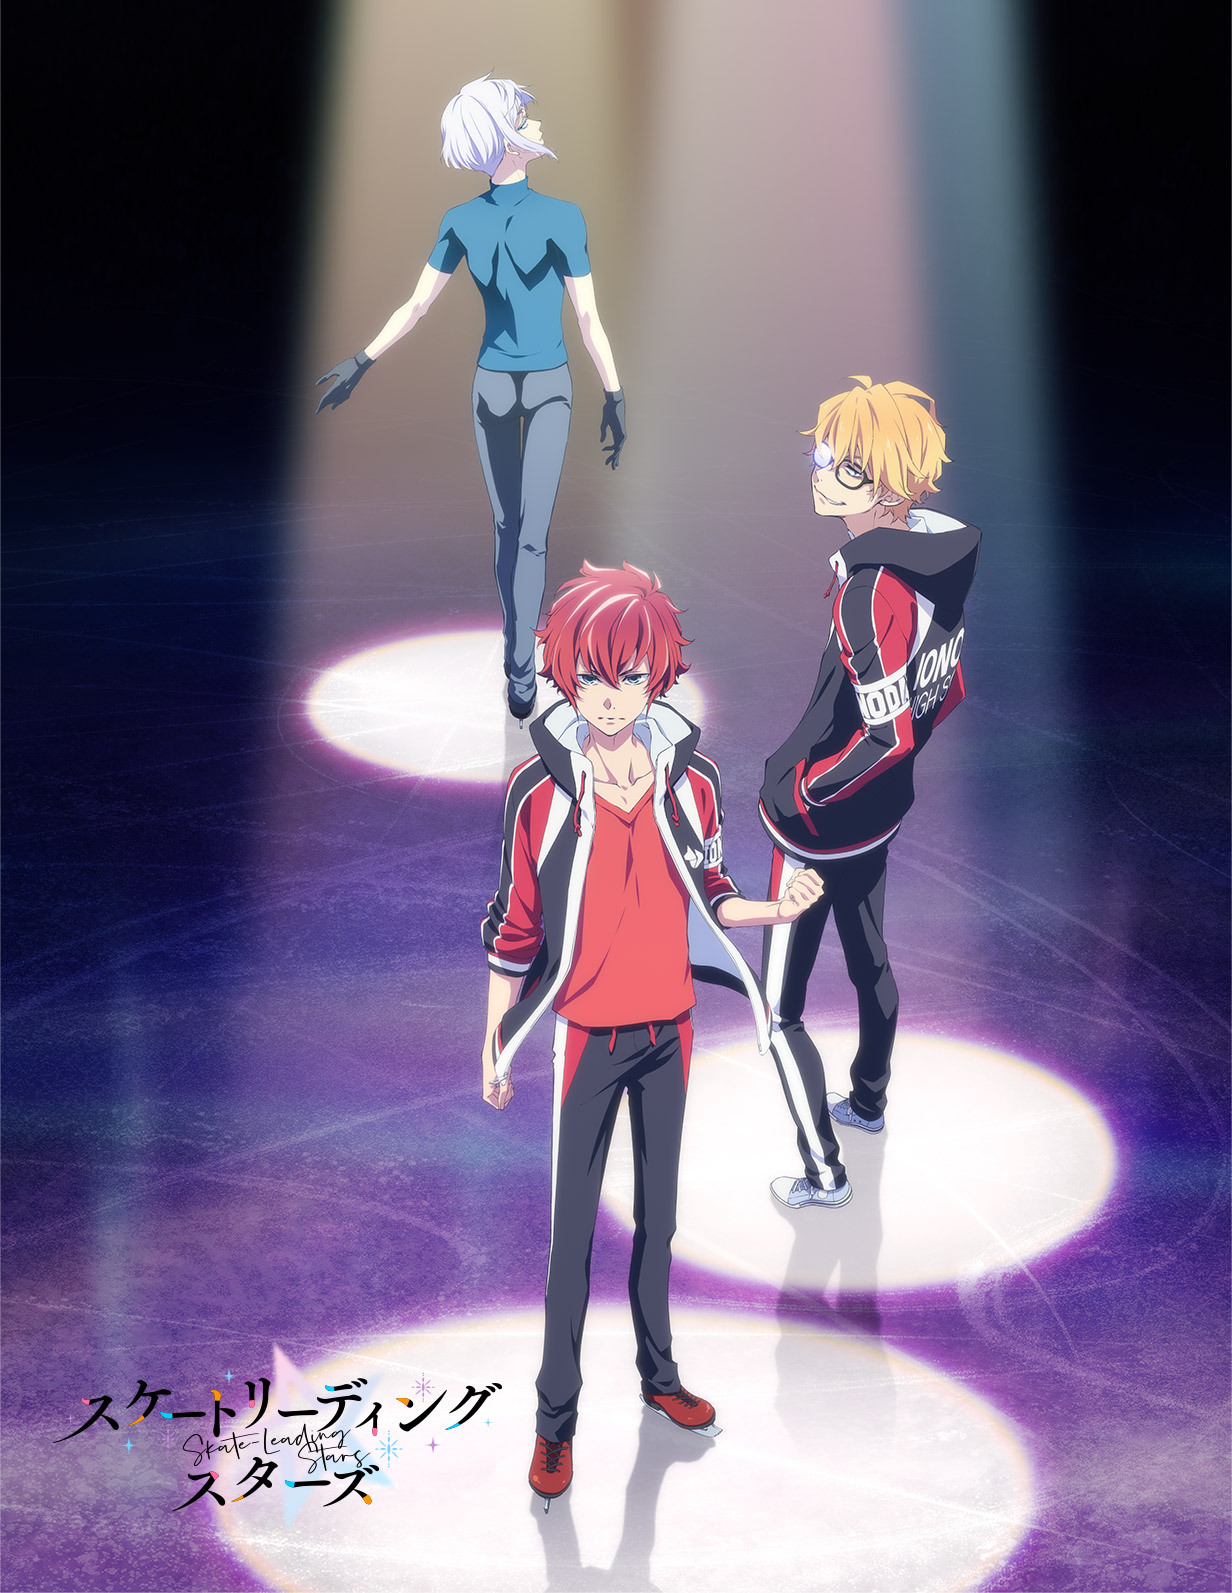 An original TV anime from studio J.C.Staff, titled “Skating Leading☆Stars,” has been announced for 2020.
-Staff-• Chief Director: Gorou Taniguchi
• Original Charcater Design: Yana Toboso
• Studio: J.C.Staff
-Cast-• Kensei Maeshima (CV: Yuuma...